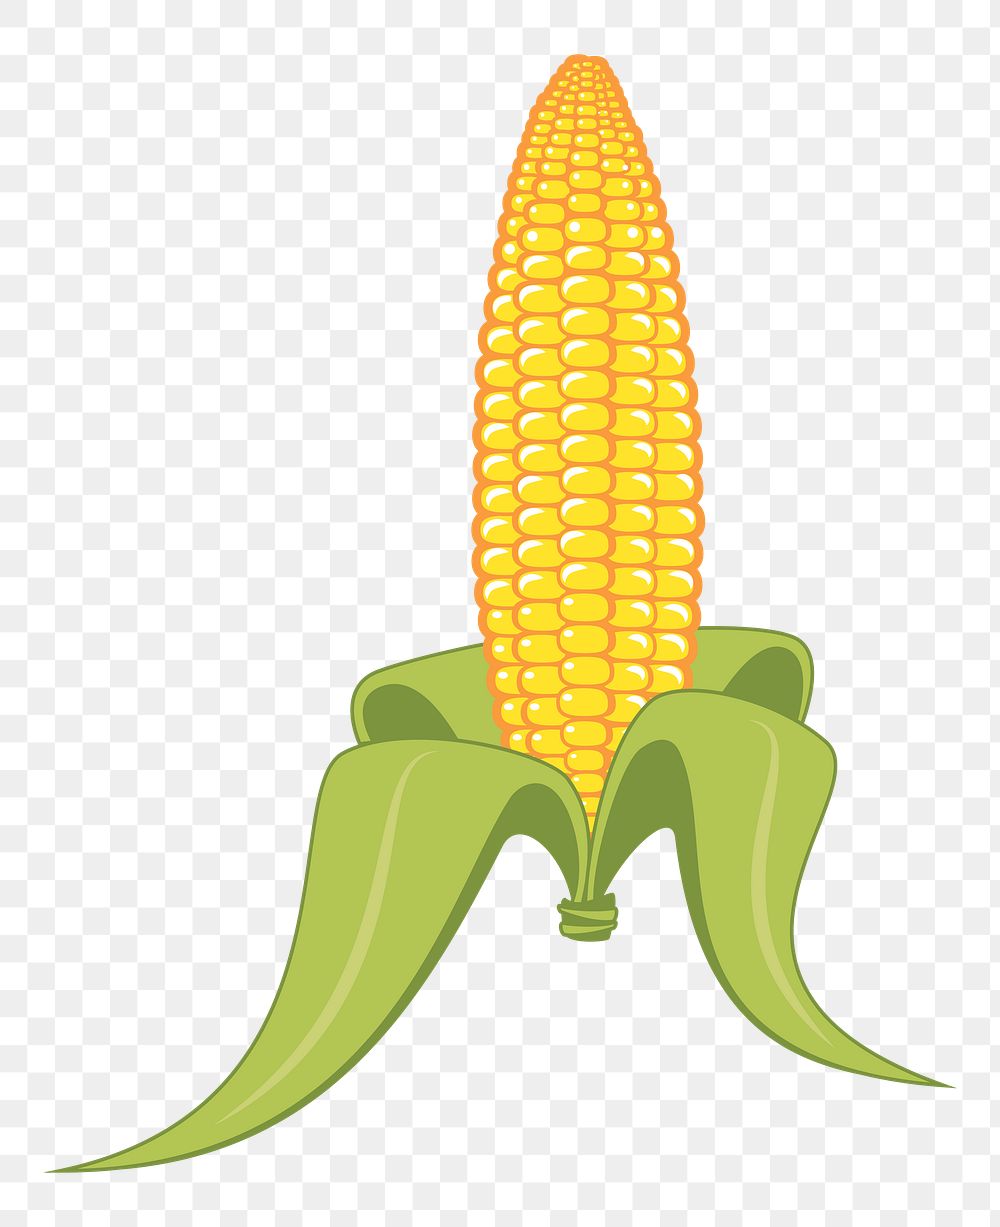 Corn png illustration, transparent background. Free public domain CC0 image.